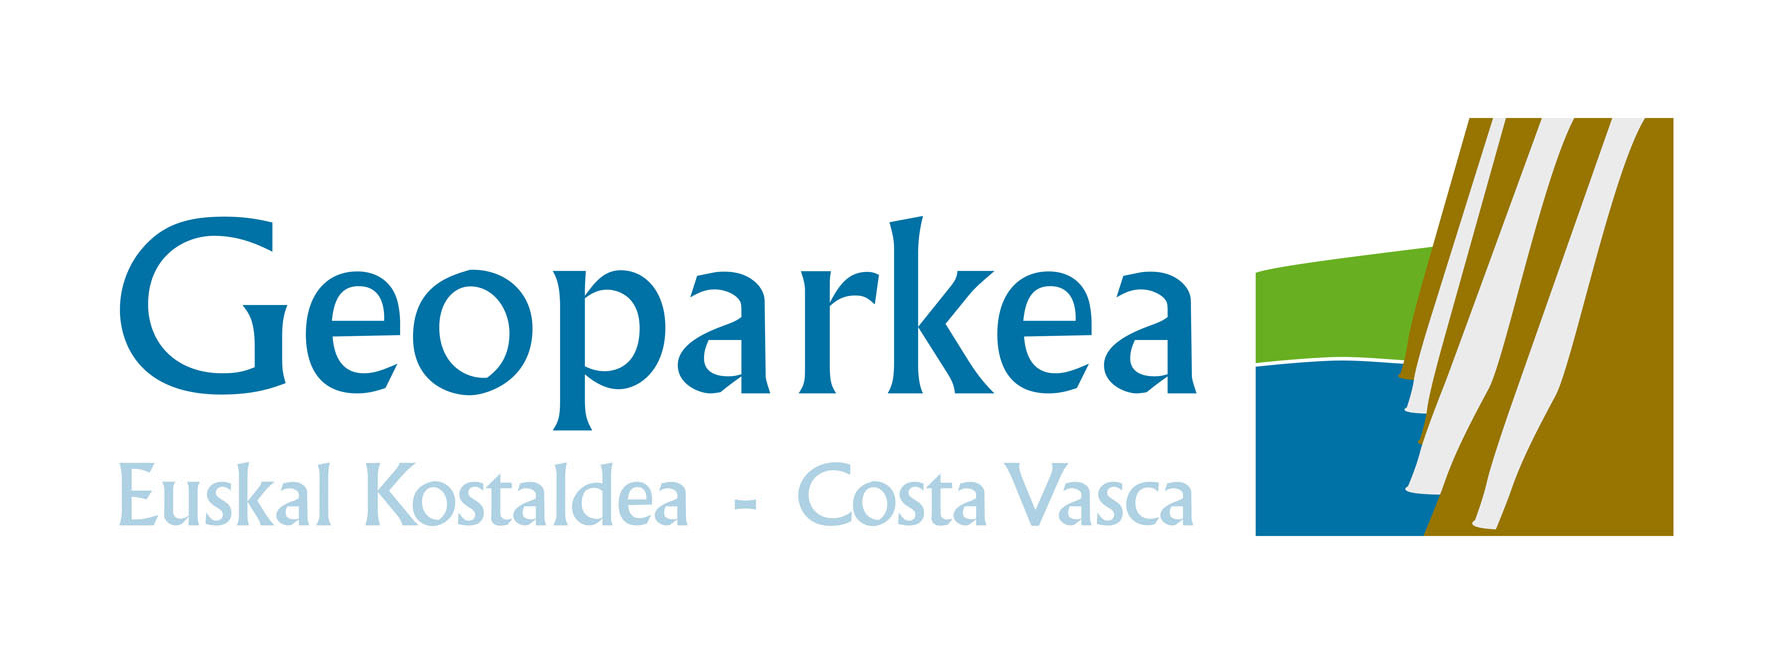 Geoparkea logo 2014